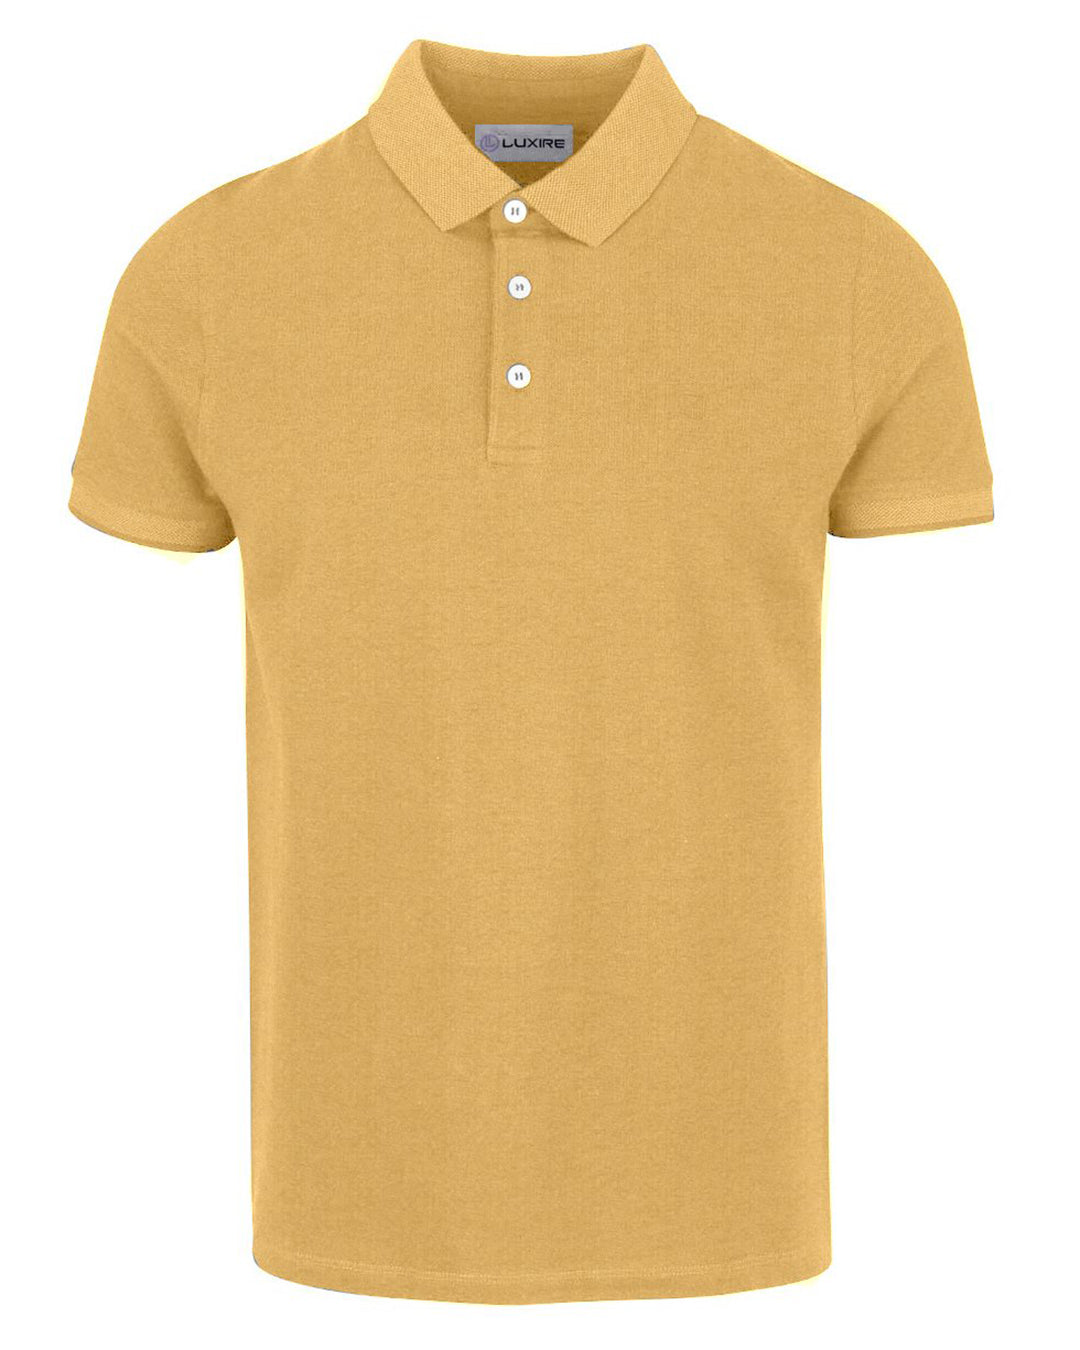 Canclini Ande: Matte Yellow T-shirt